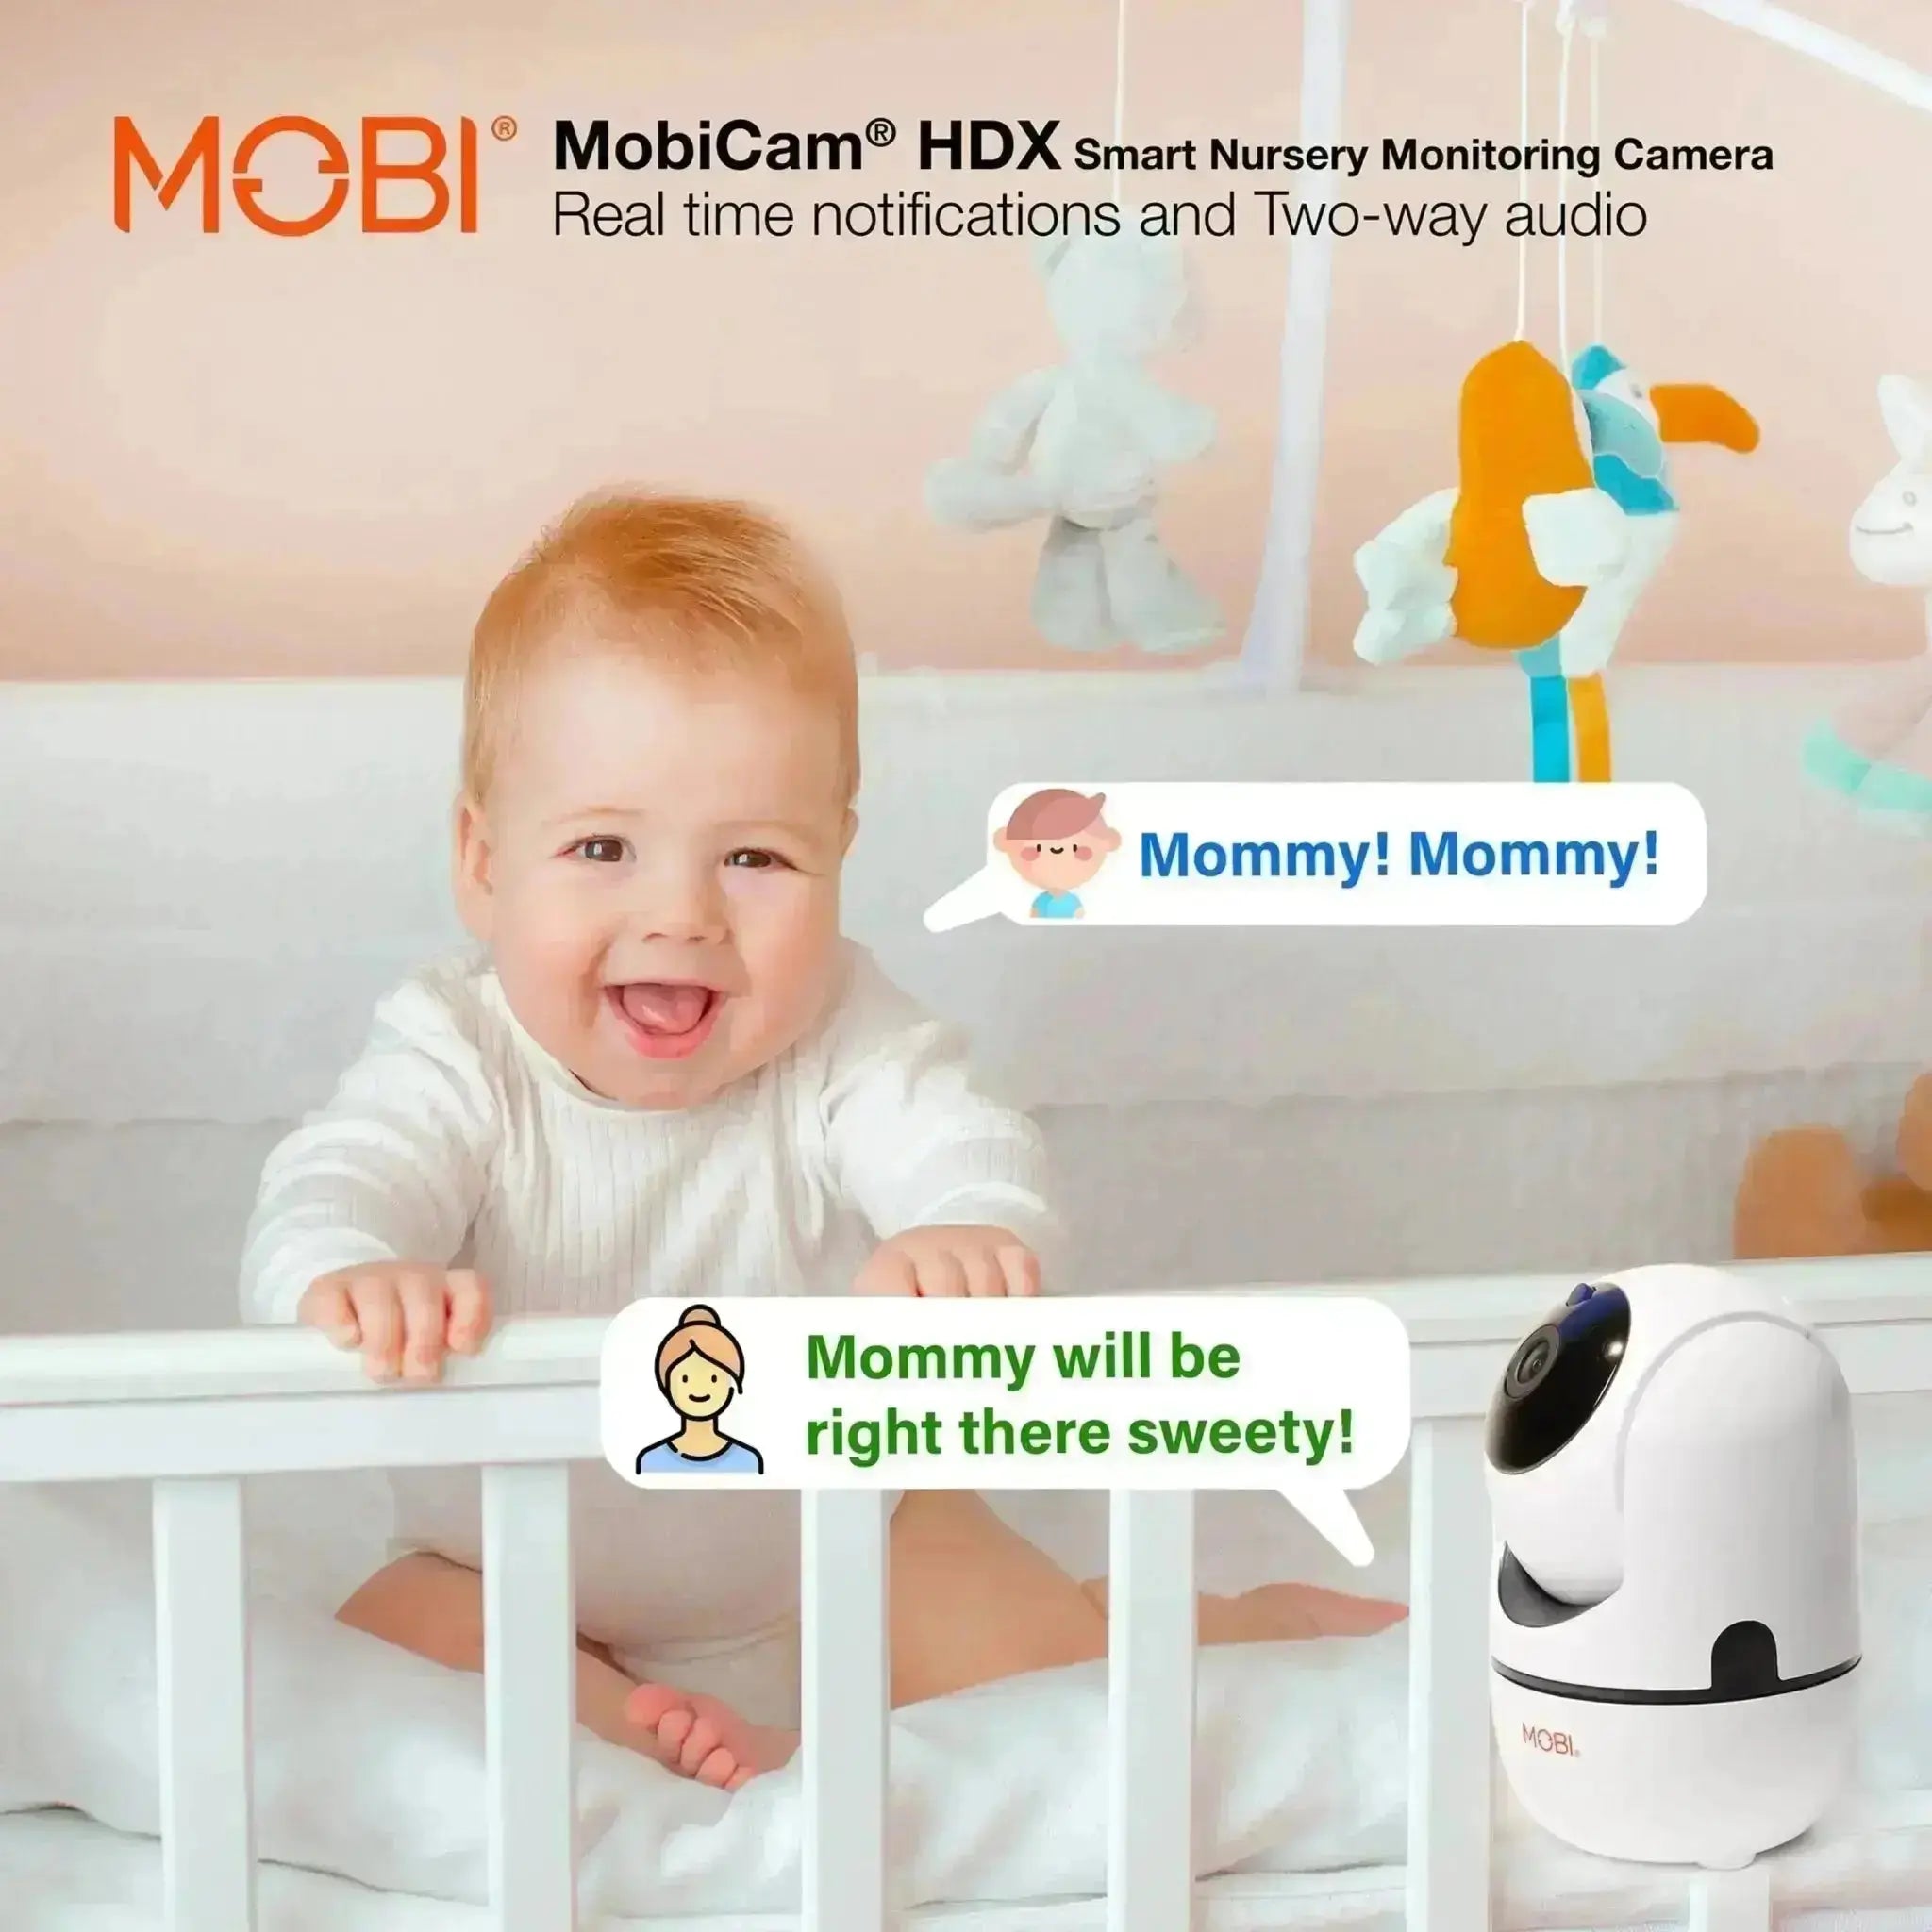 MobiCam HDX Smart Nursery Monitoring Camera